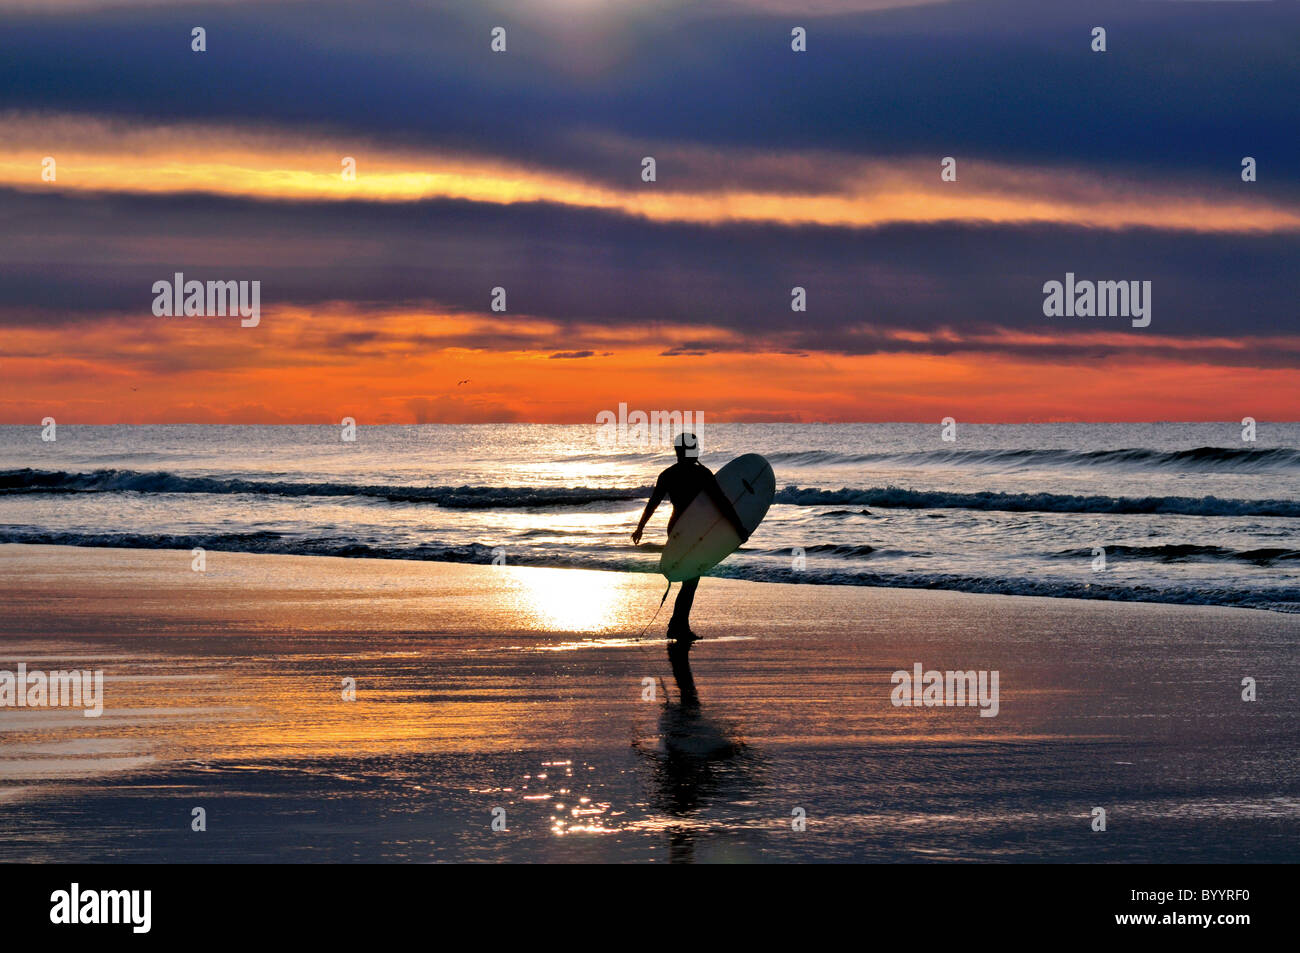 Portugal, Algarve: Surfer at beach Praia do Amado Stock Photo